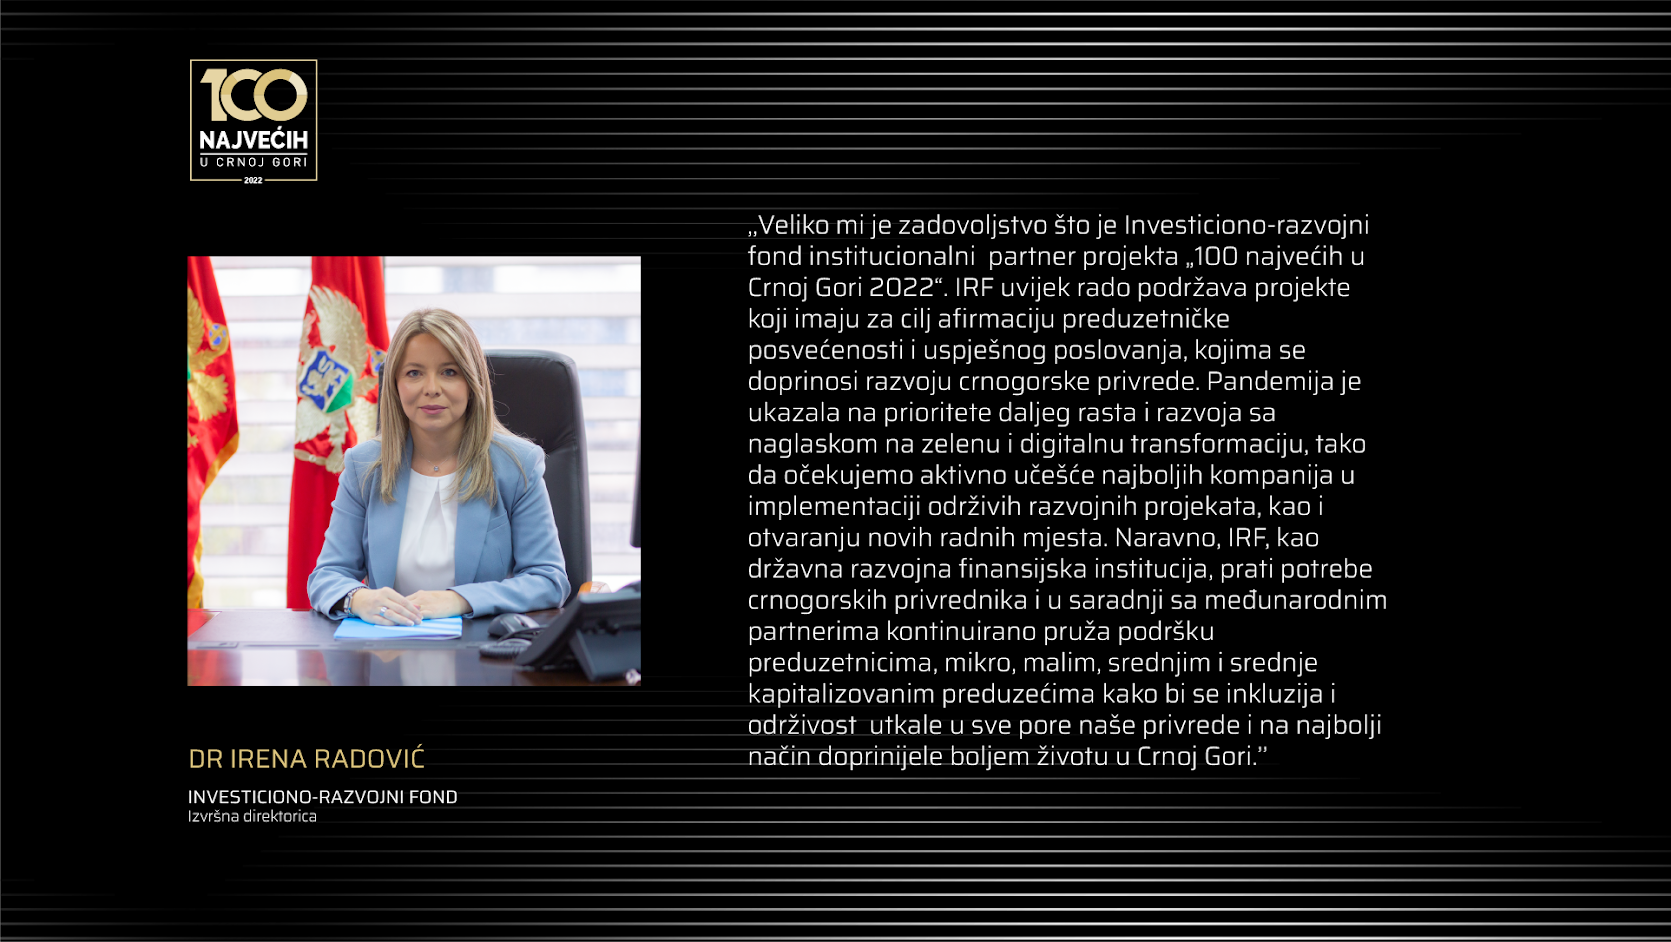 Irena Radovic 2022